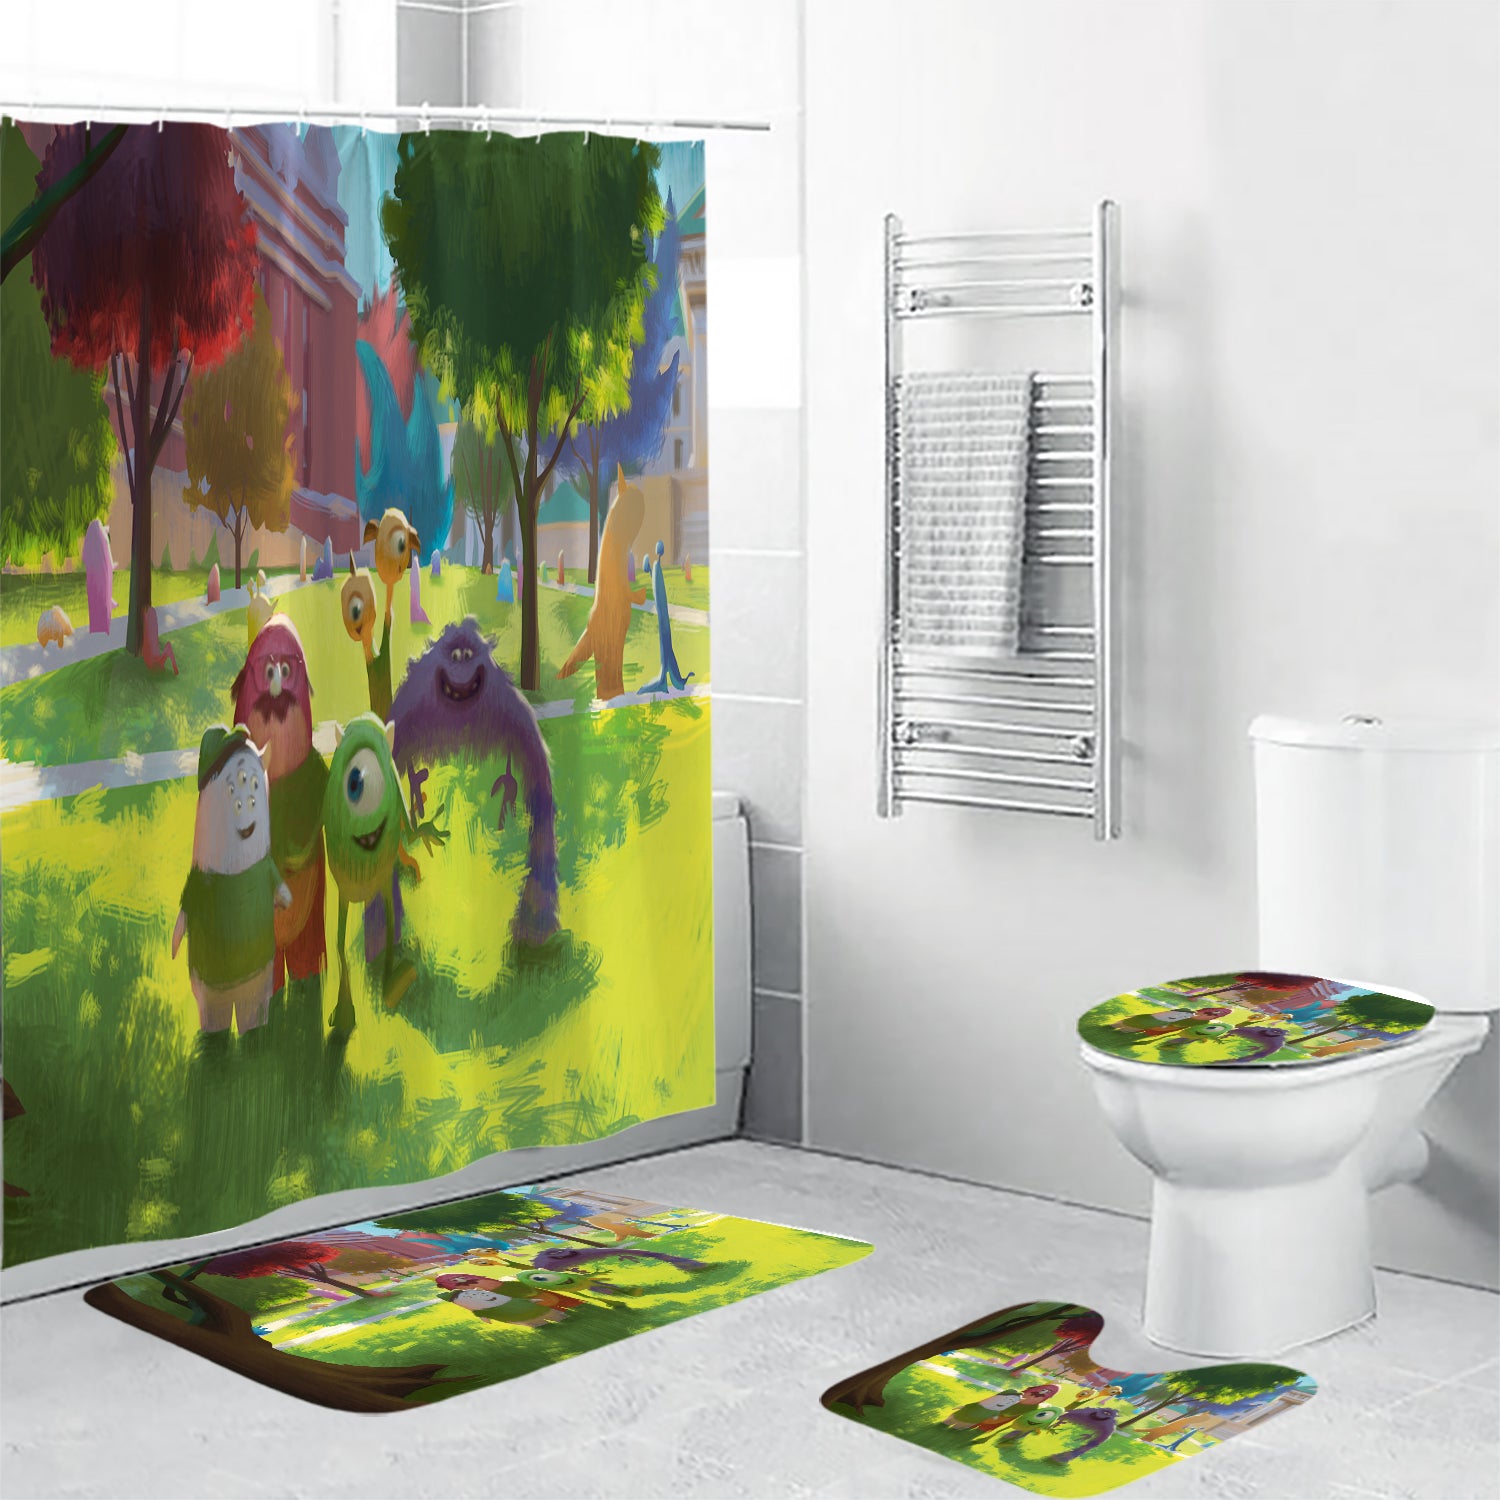 Characters v10 Monsters Inc Monsters University Movie Disney Pixar Waterproof Shower Curtain Non-Slip Toilet Lid Cover Bath Mat - Bathroom Set